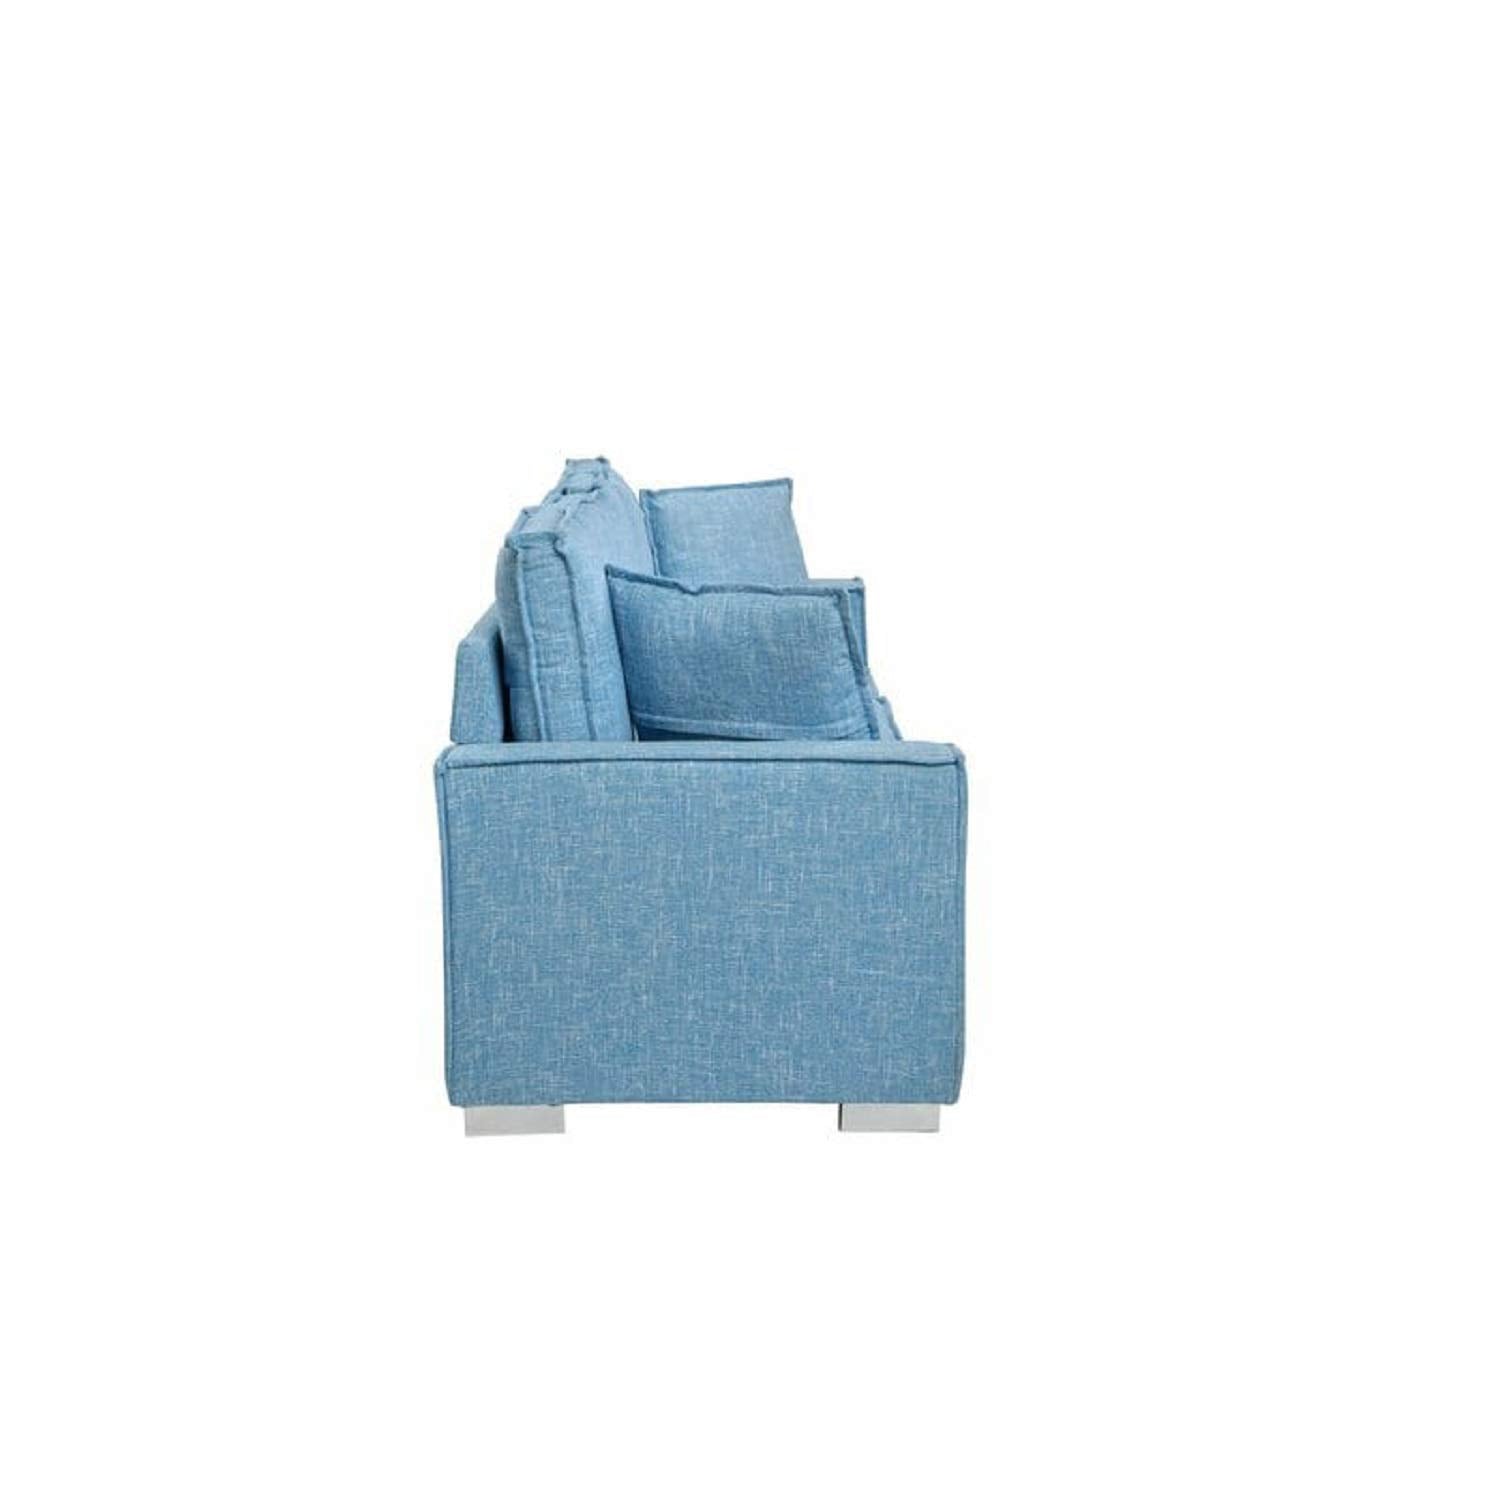 Designer Sofa Set:- 4 Seater Fabric Luxury Furniture Sofa Set (Light Blue)